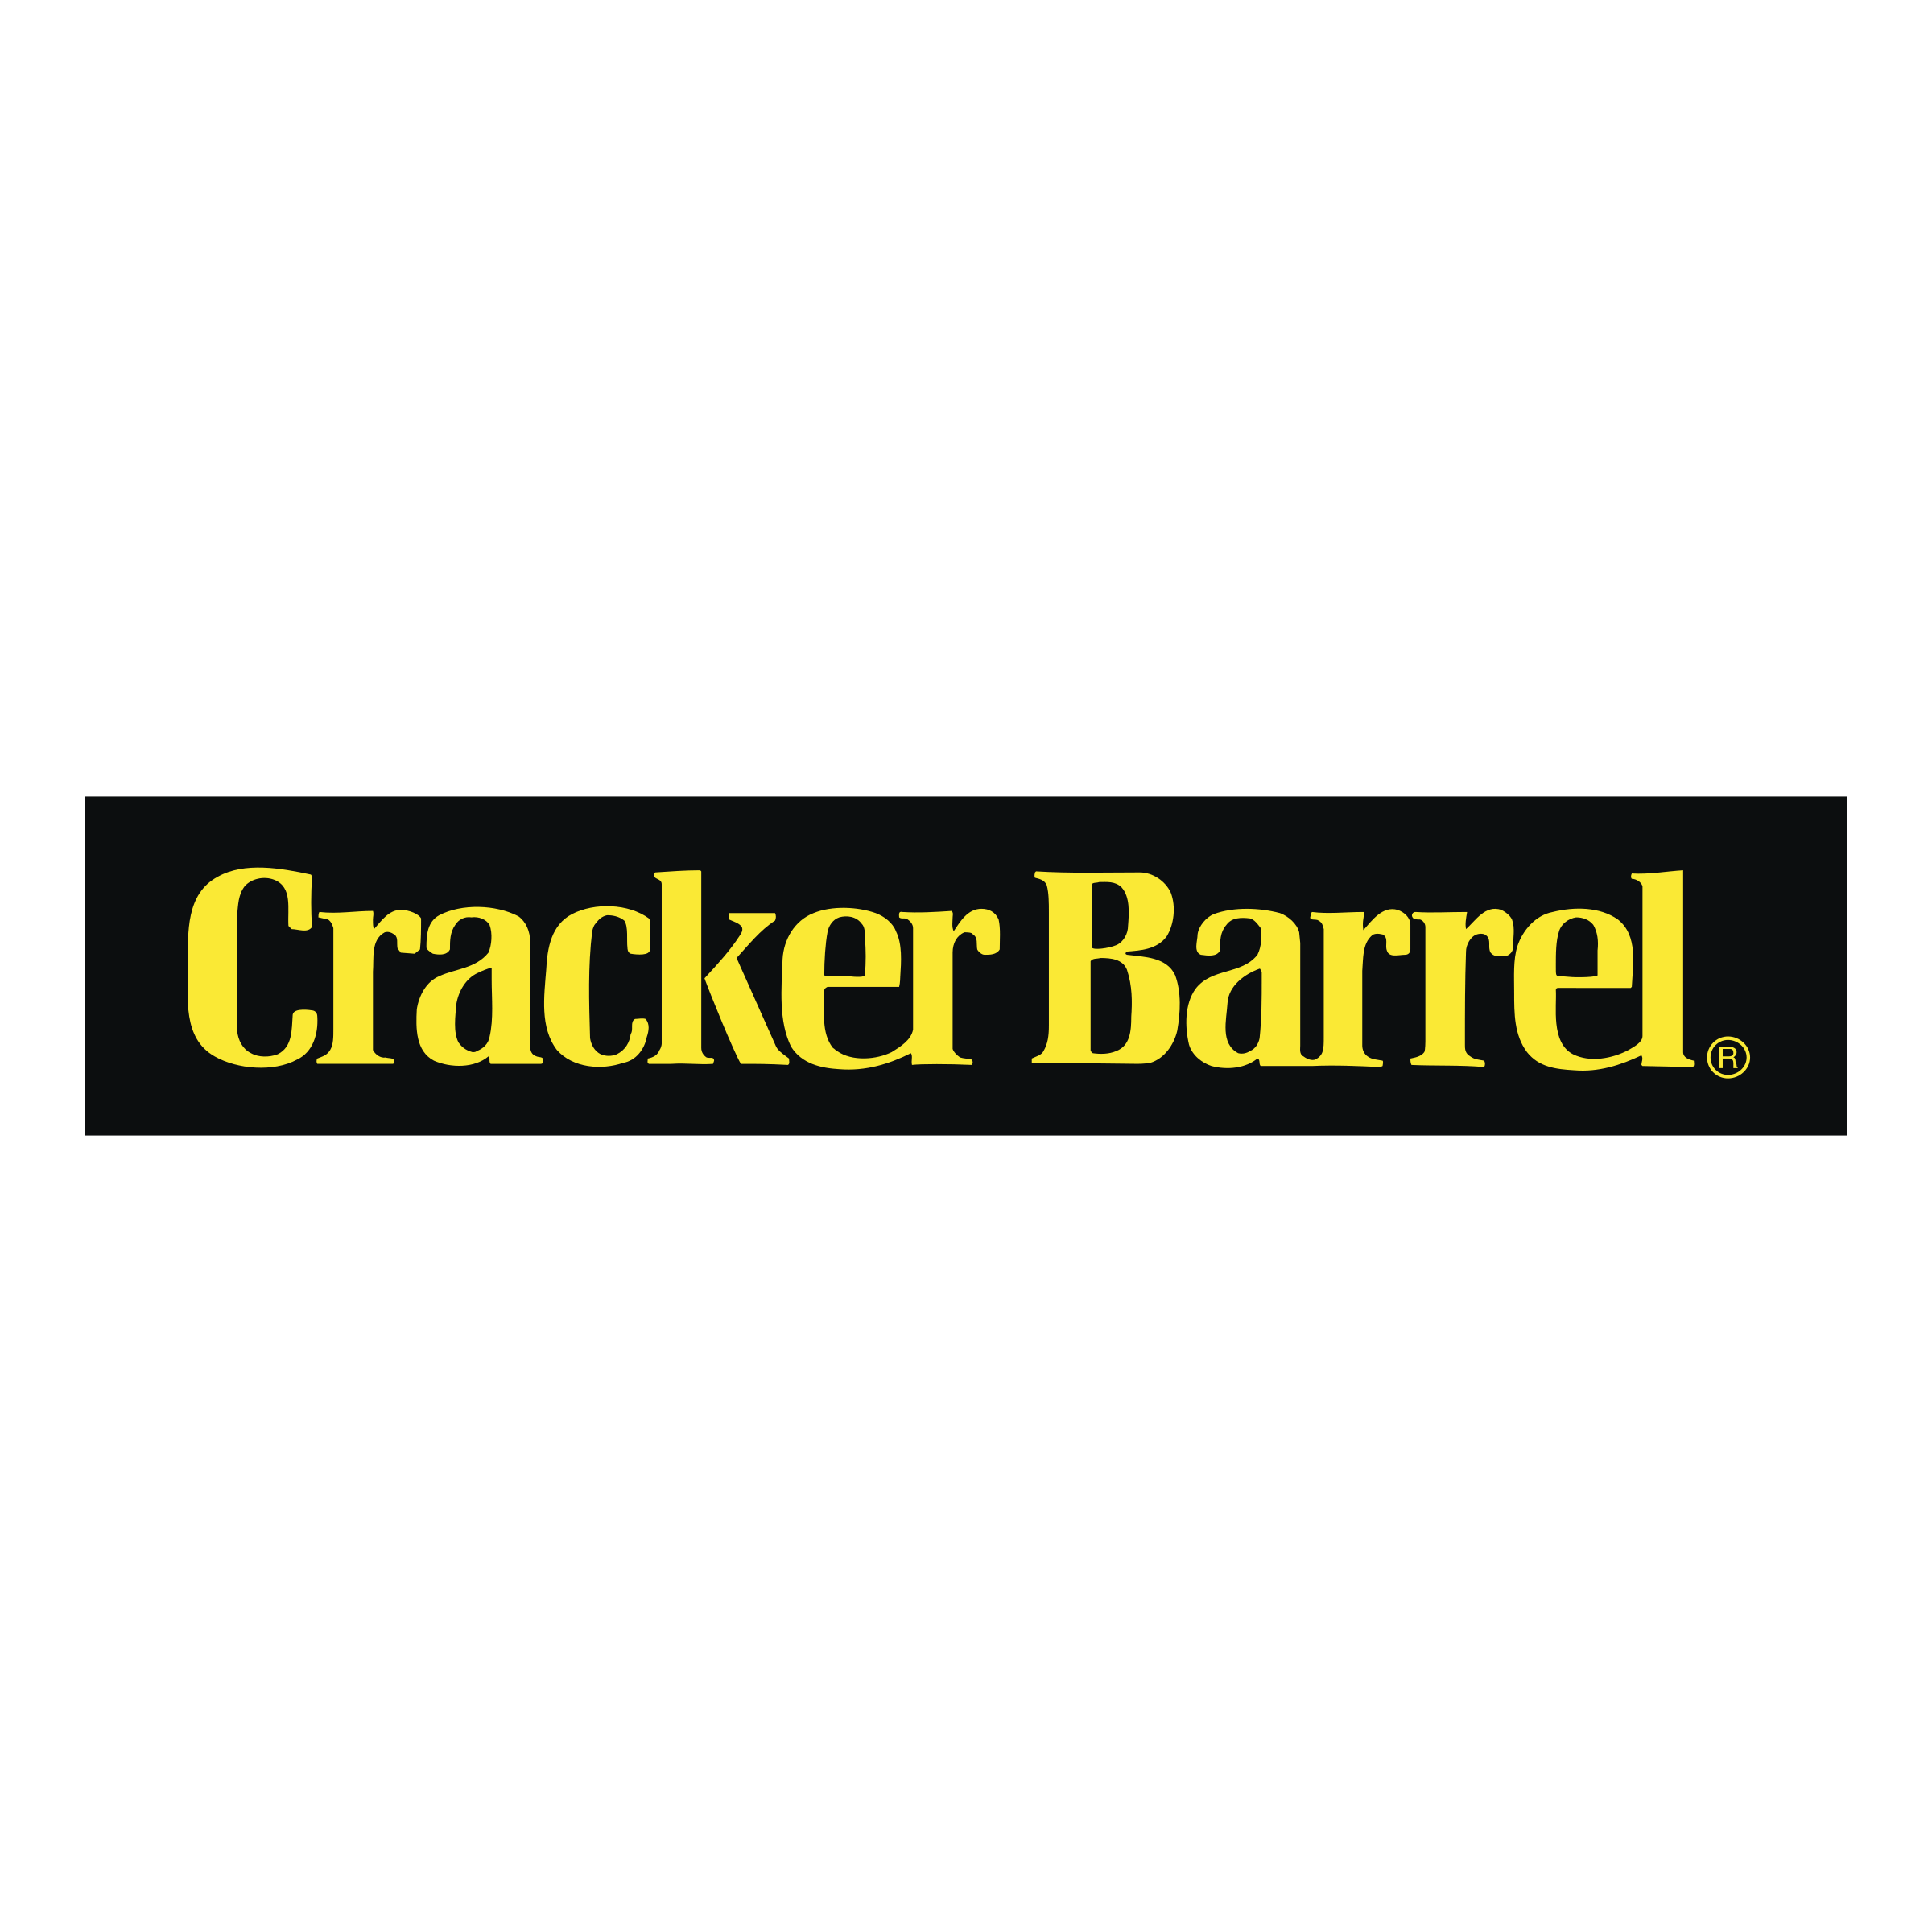 Cracker Logo - Cracker Barrel Logo PNG Transparent & SVG Vector - Freebie Supply